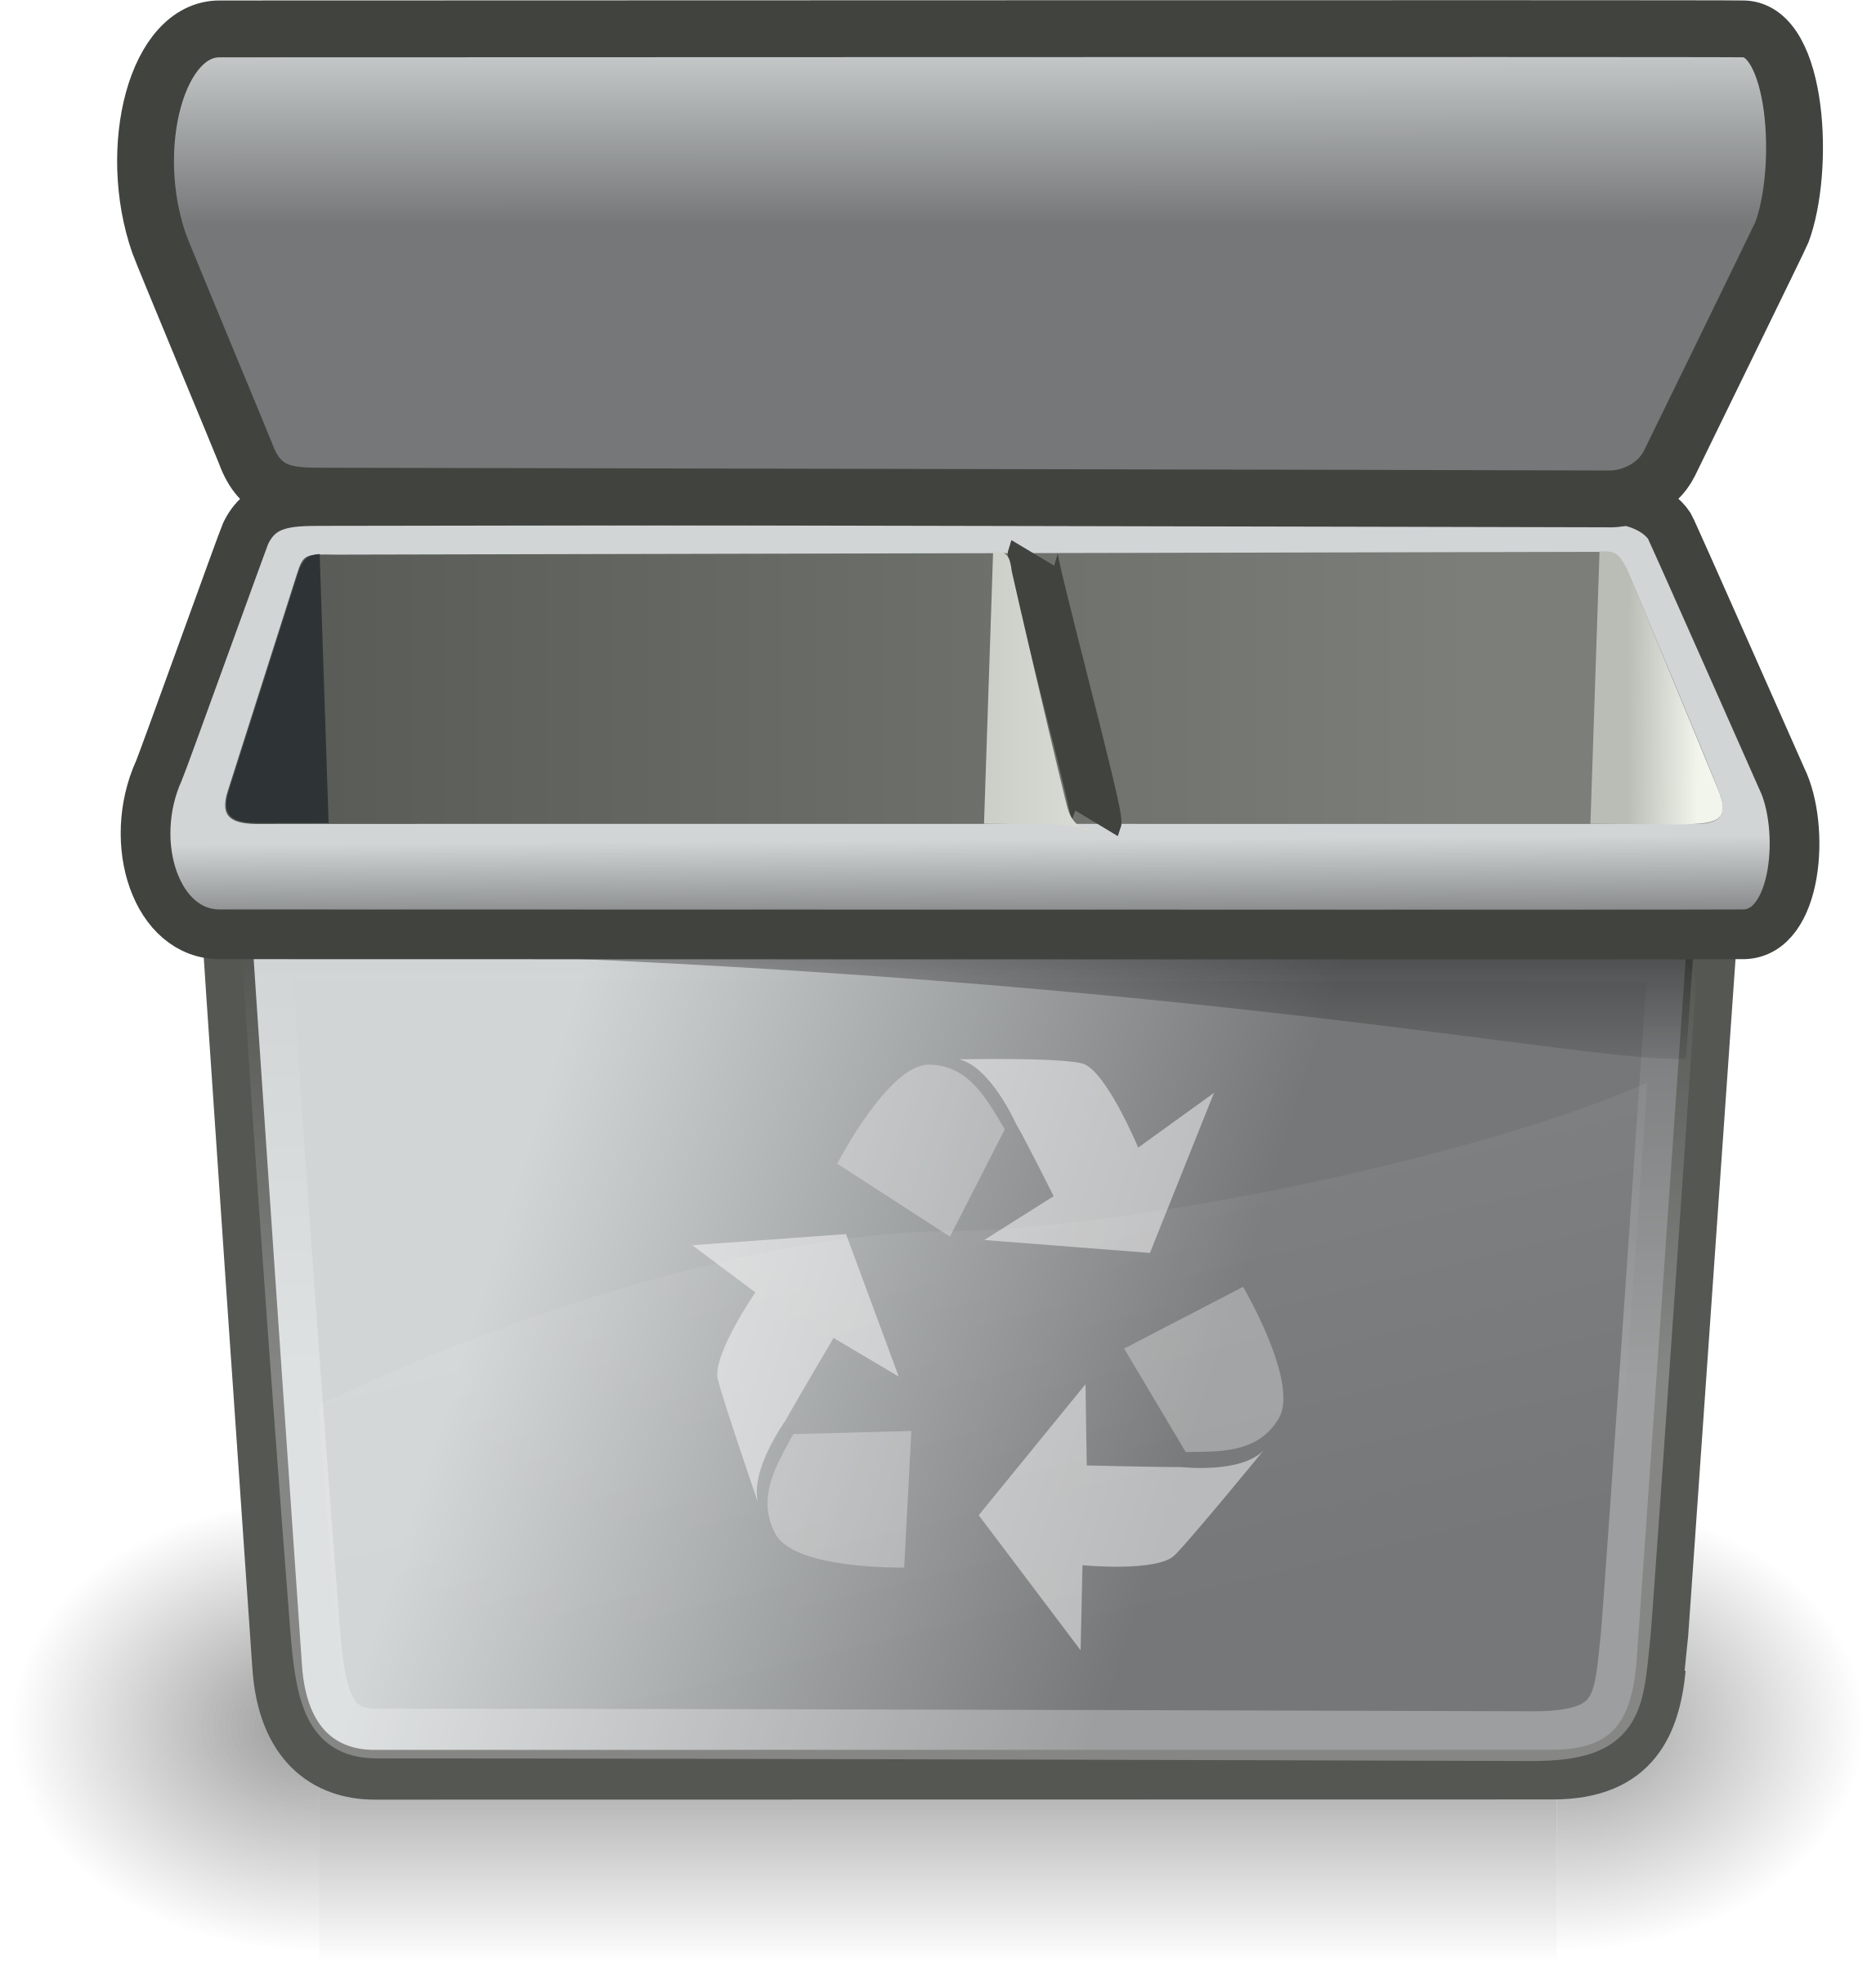 Clipart - Gray recycle bin